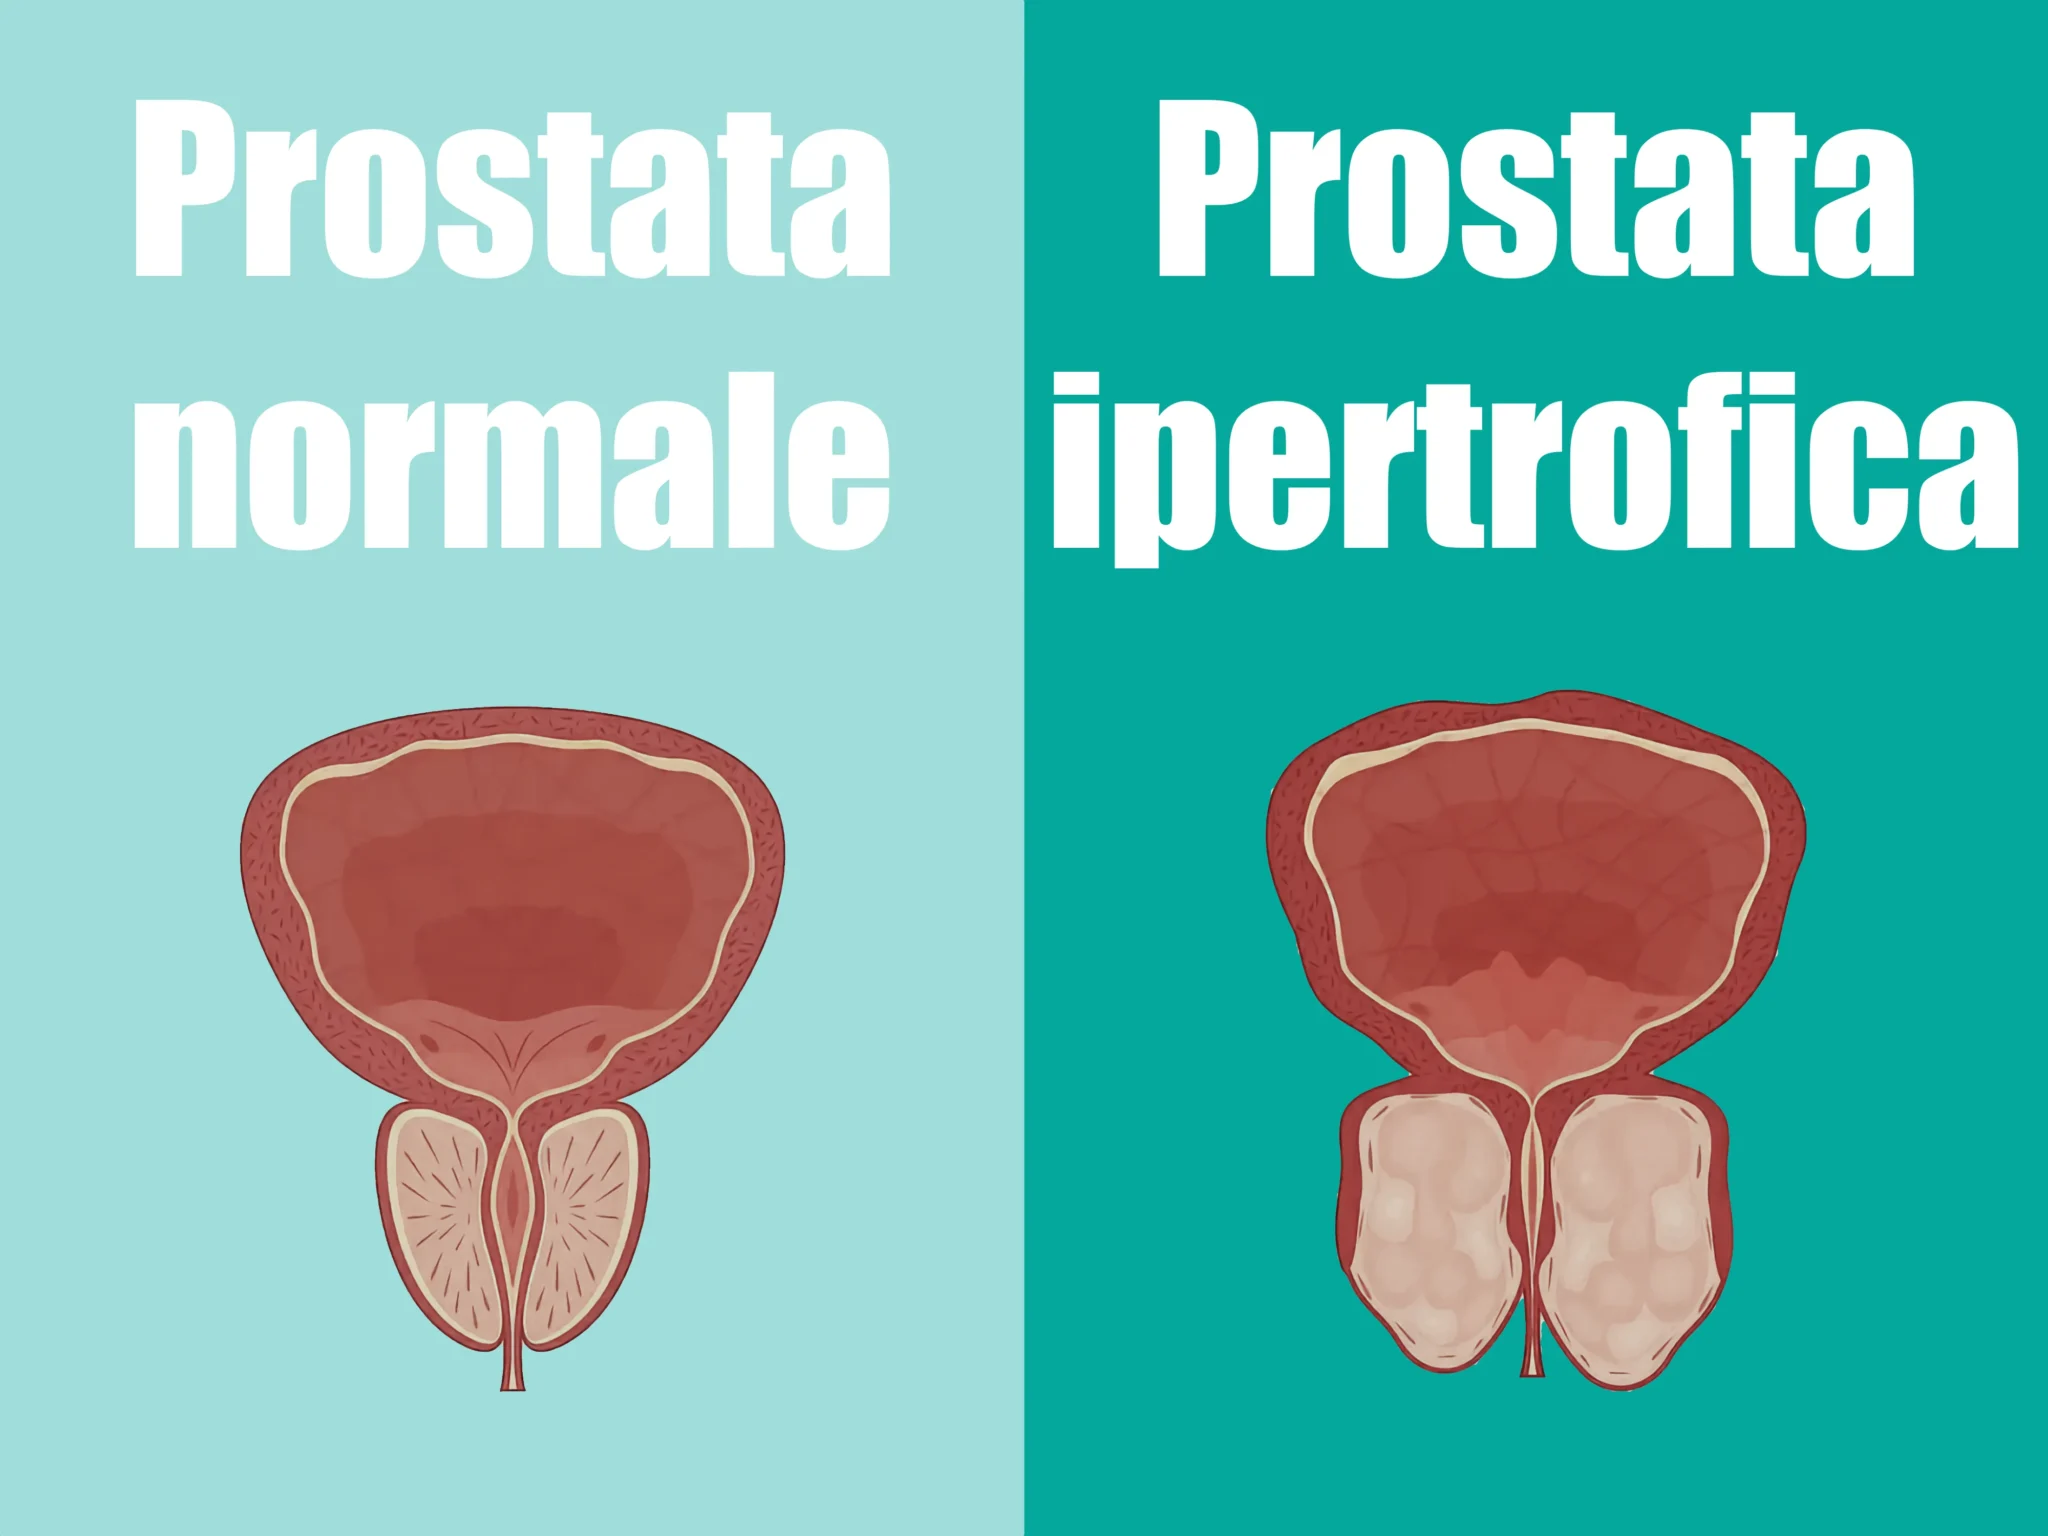 Ipertrofia prostatica paragonata a prostata normale